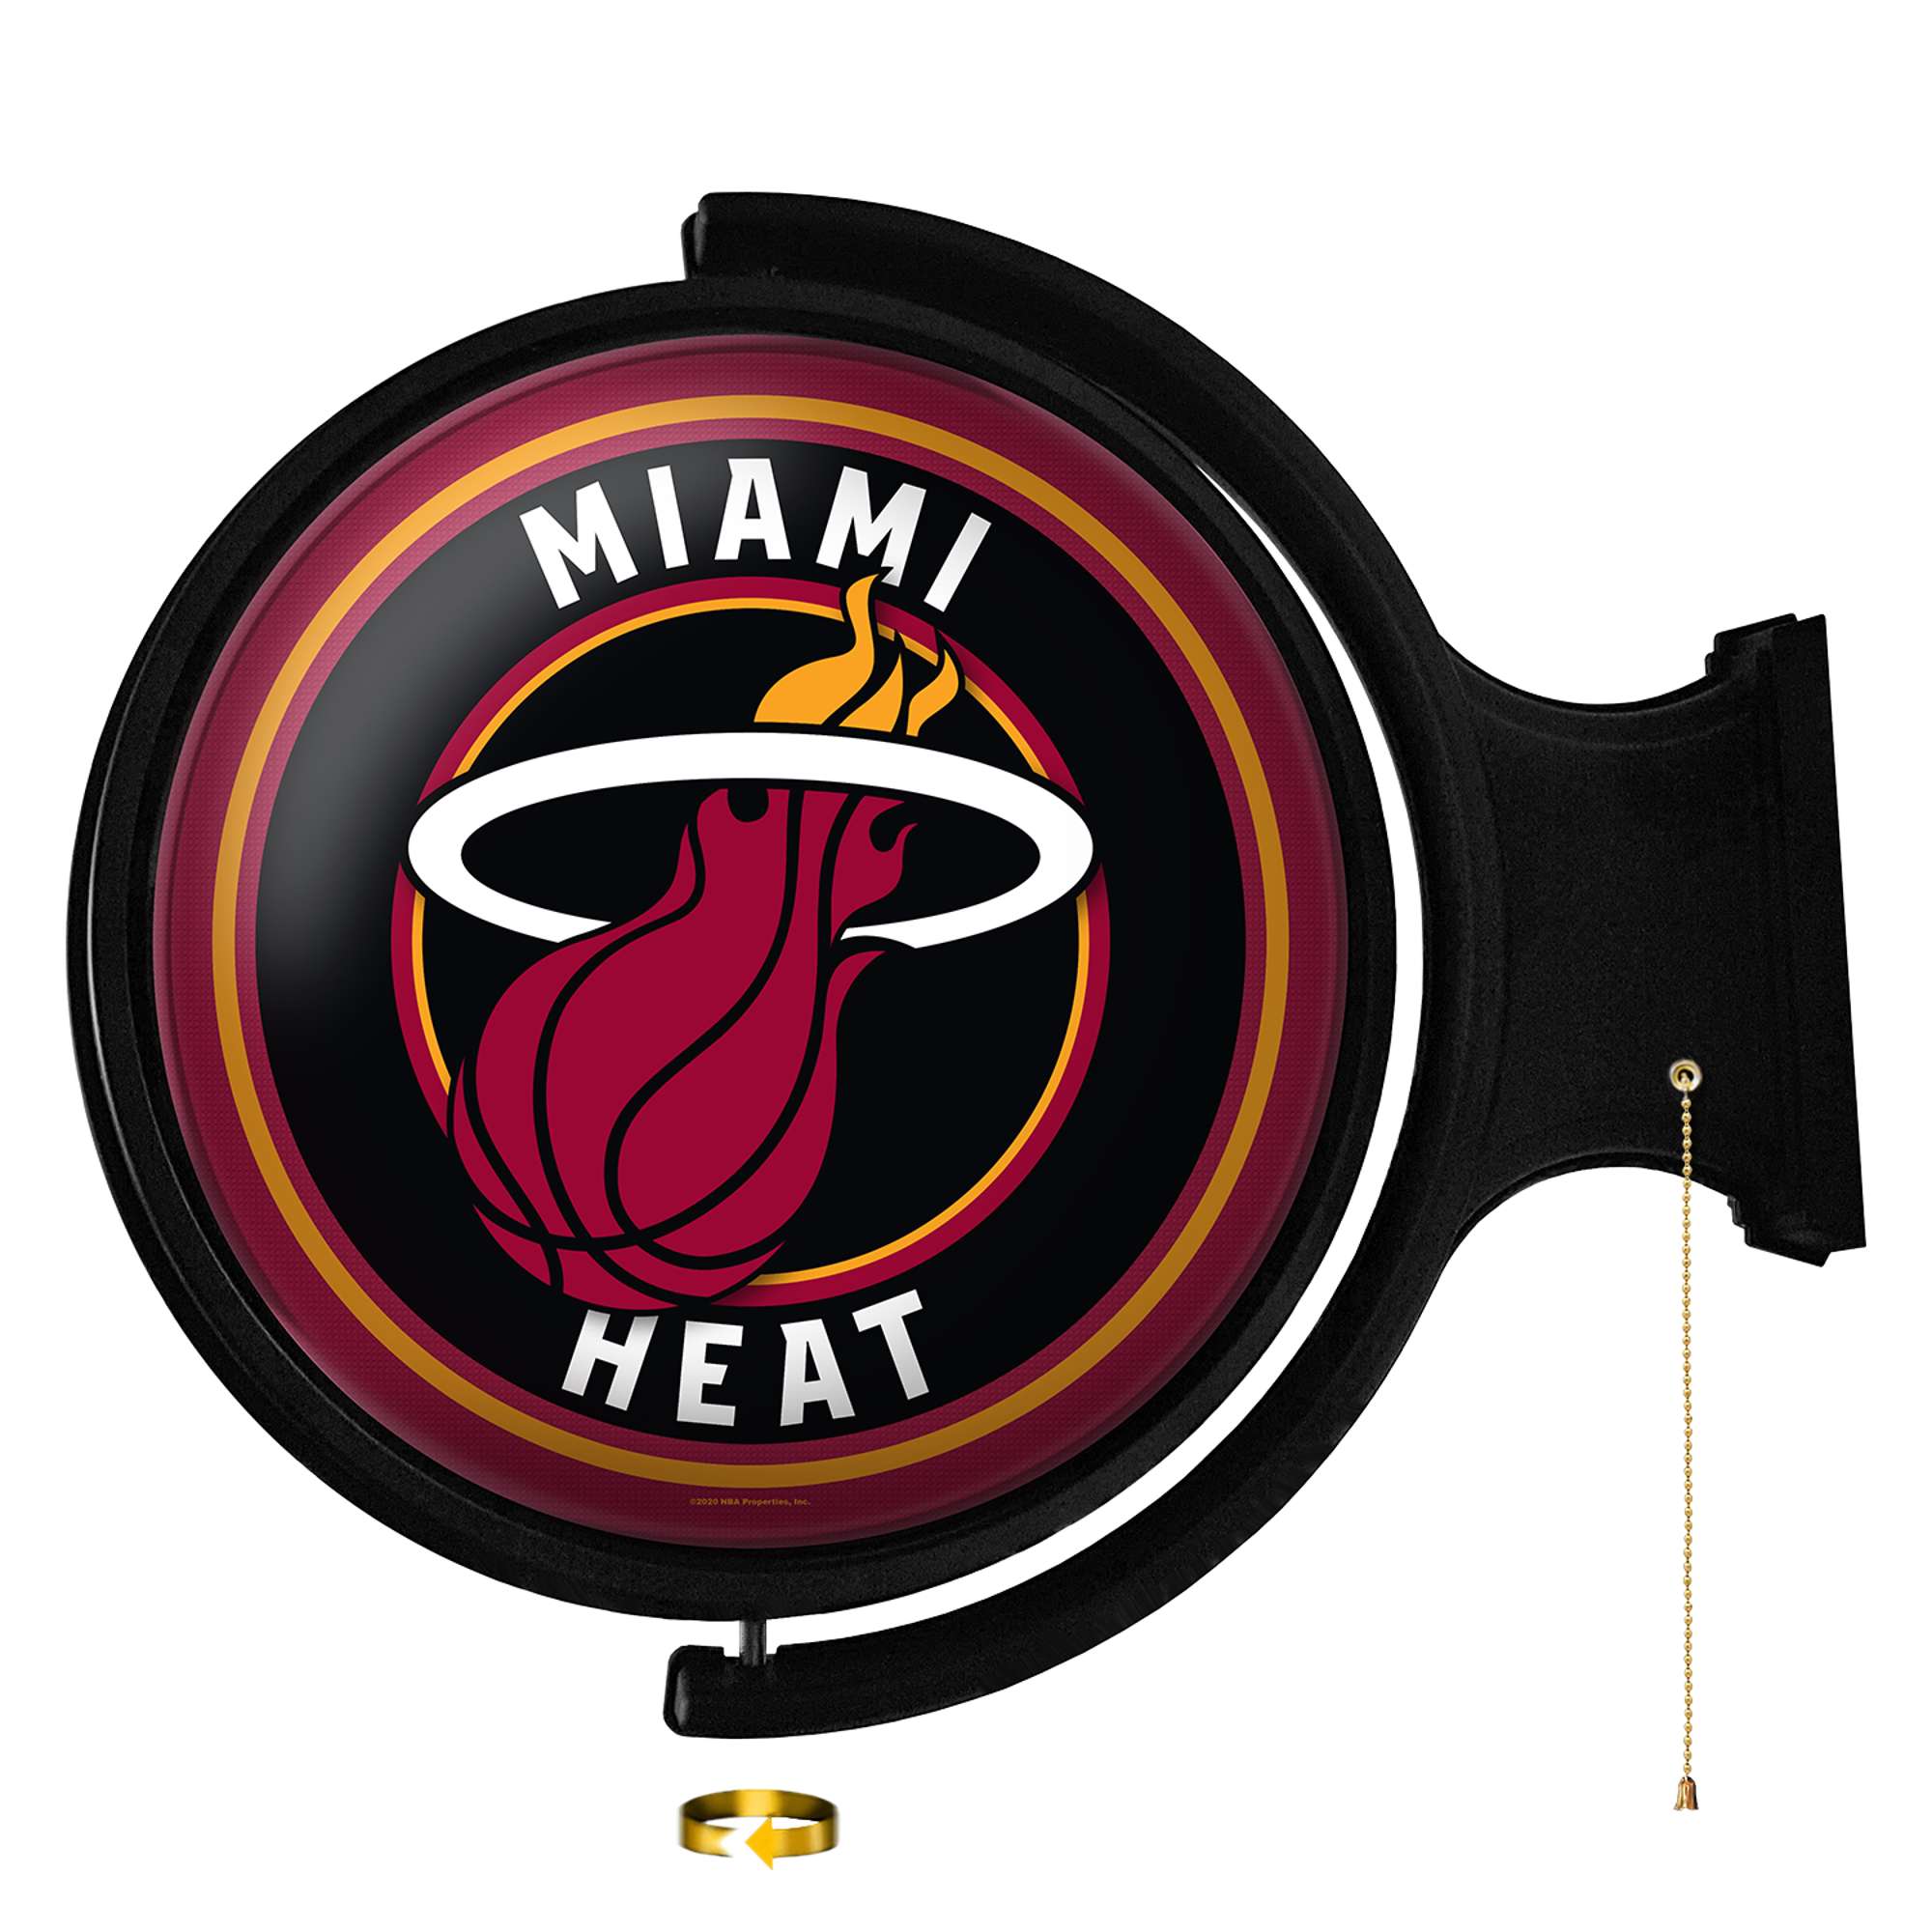 Miami Heat: Original Round Rotating Lighted Wall Sign